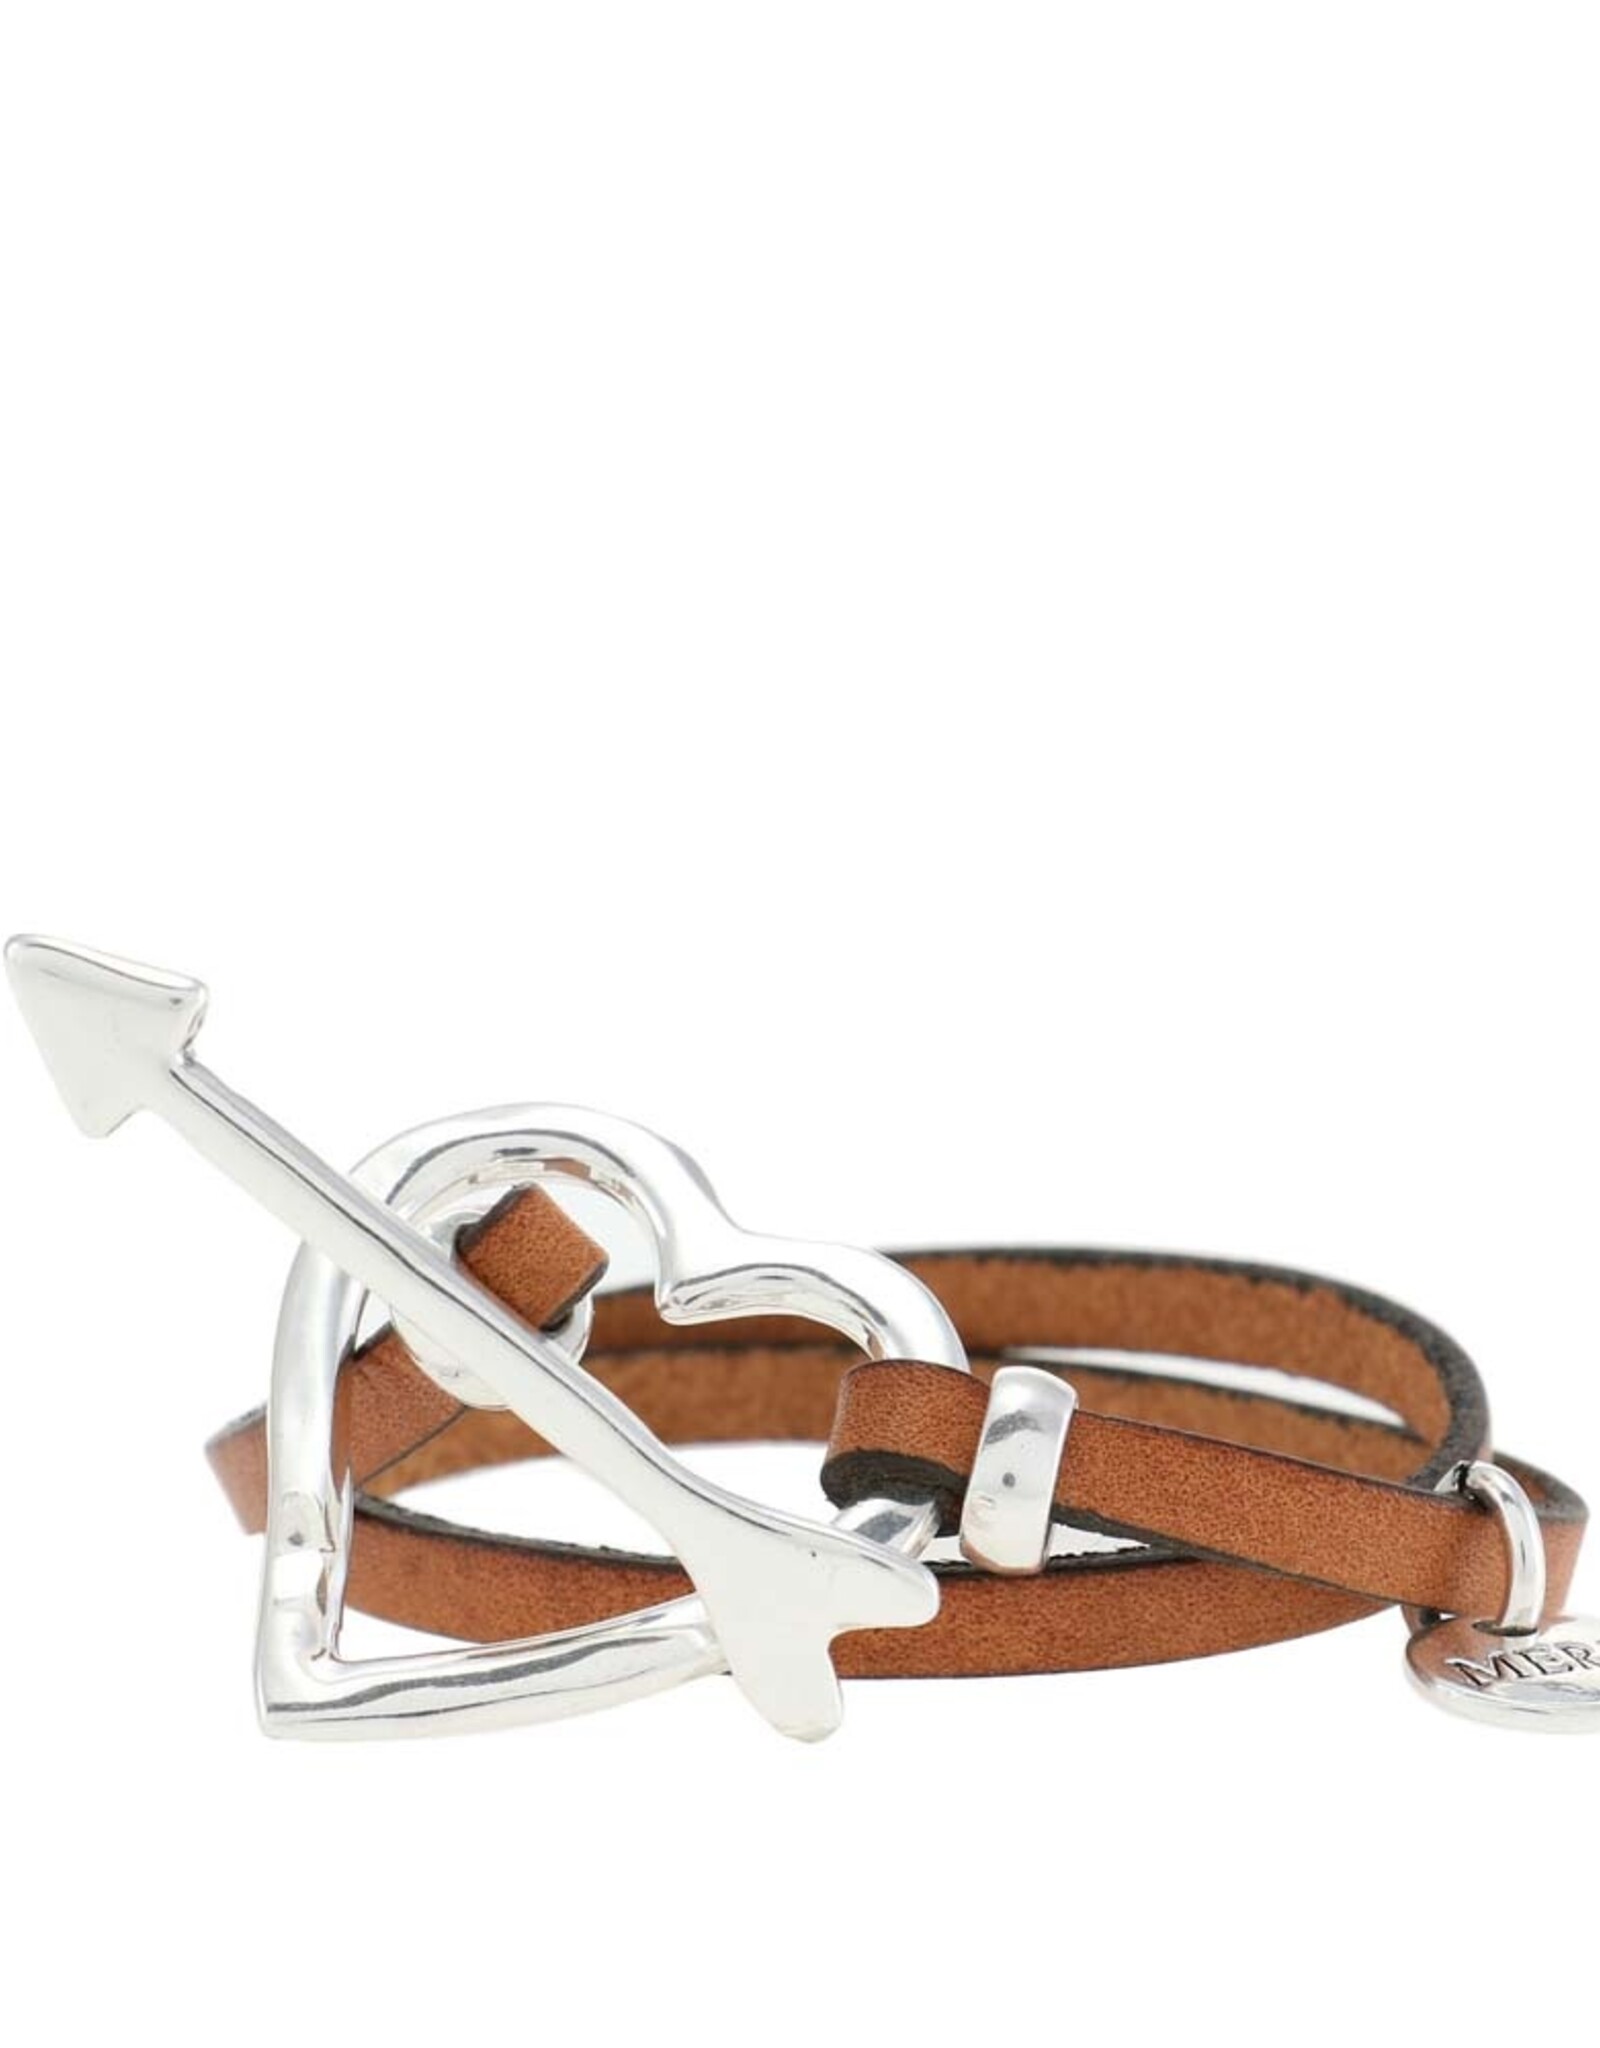 Merx Inc. Fashion Bracelet 35 Camel and Silver